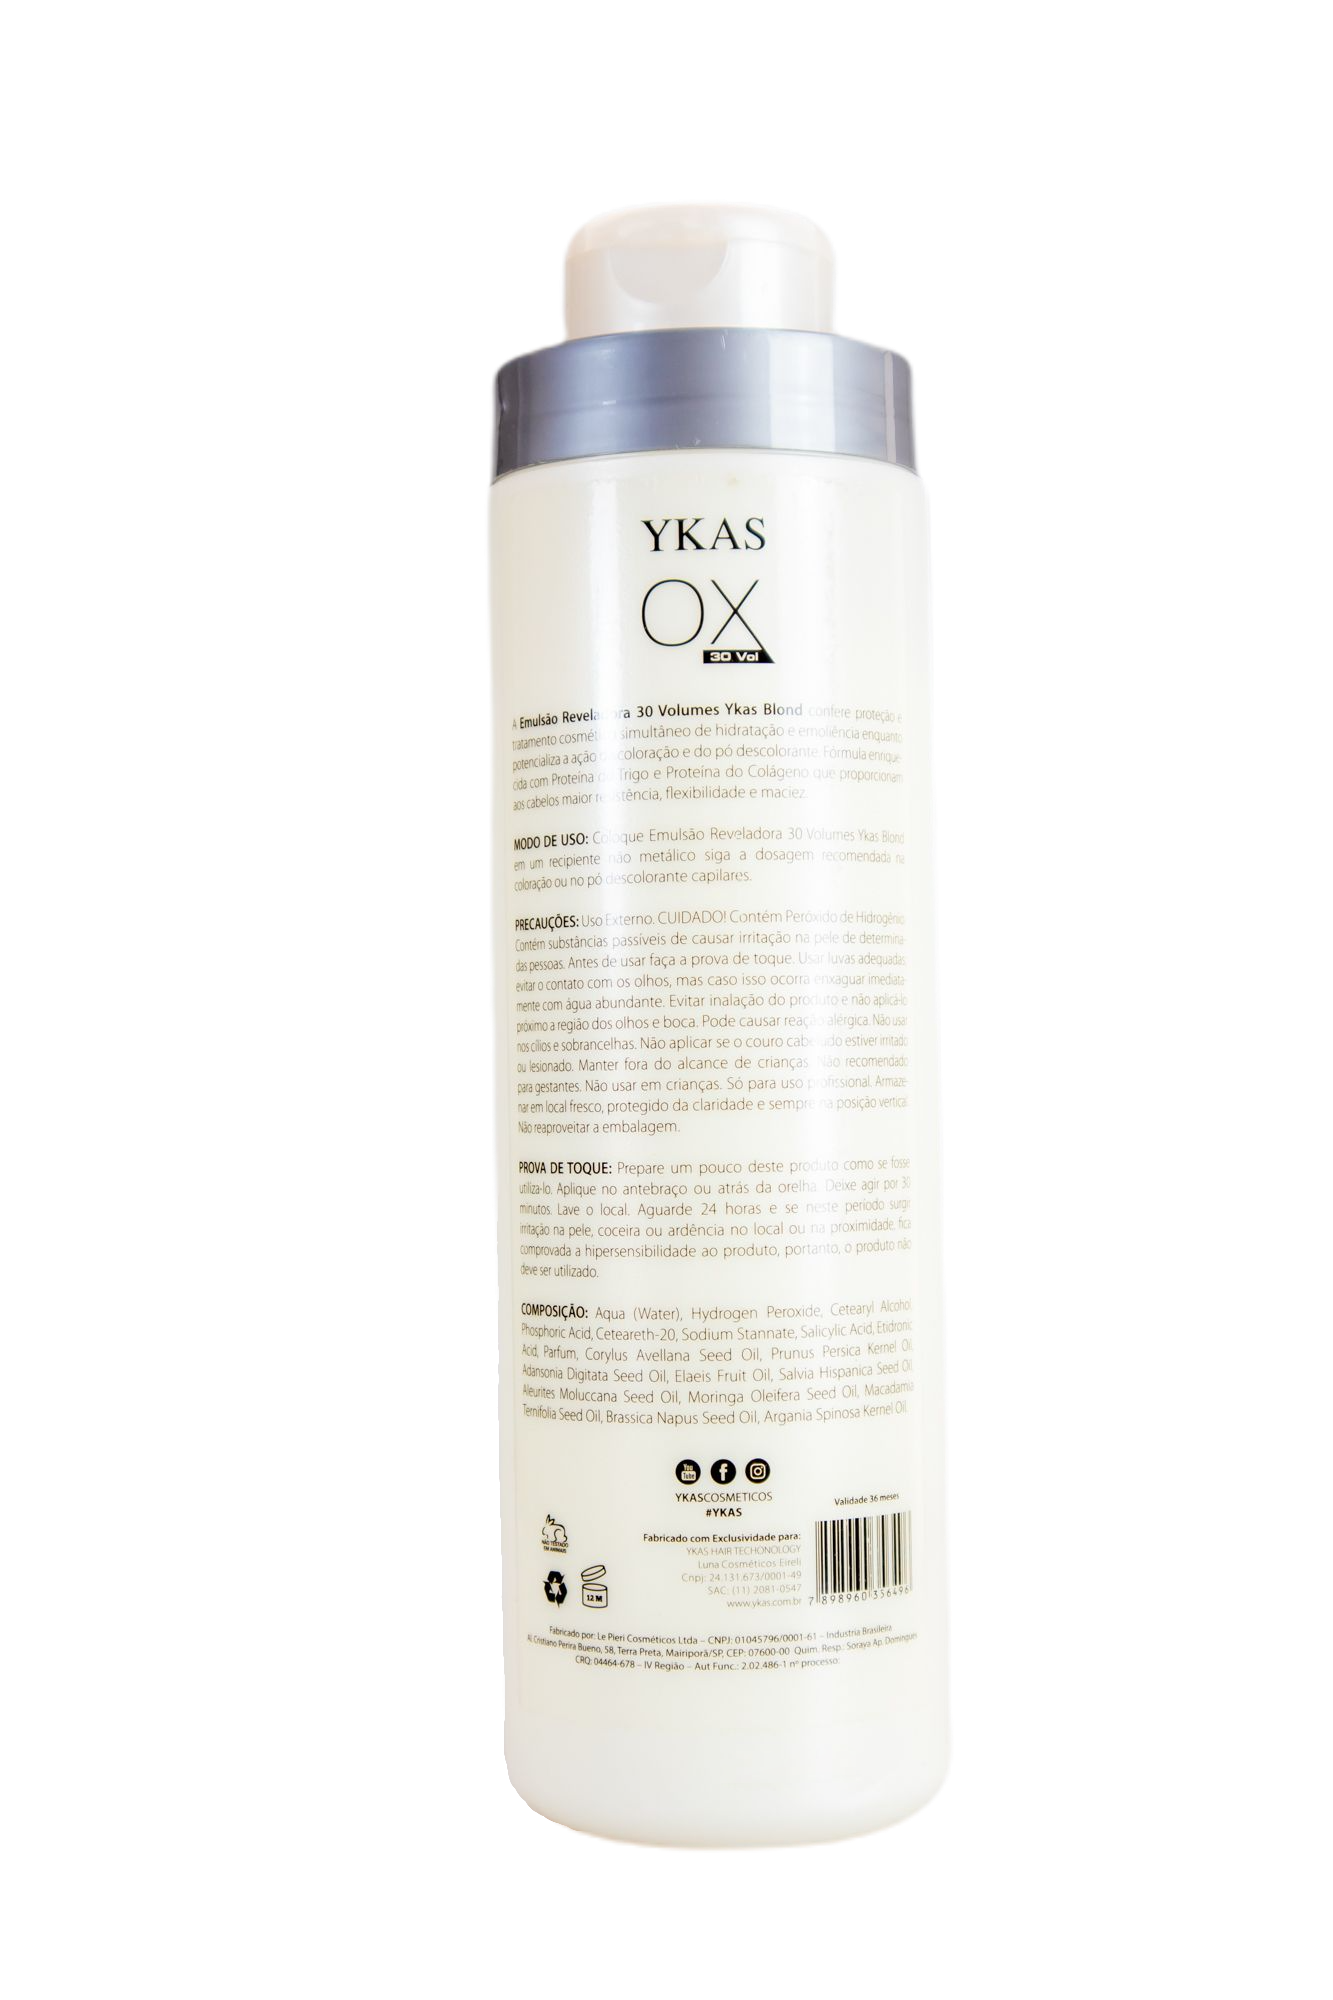 Ykas Brazilian Hair Treatment Professional Blond Oxidizing Emulsion Hair Treatment OX 30 9% 900ml - Ykas